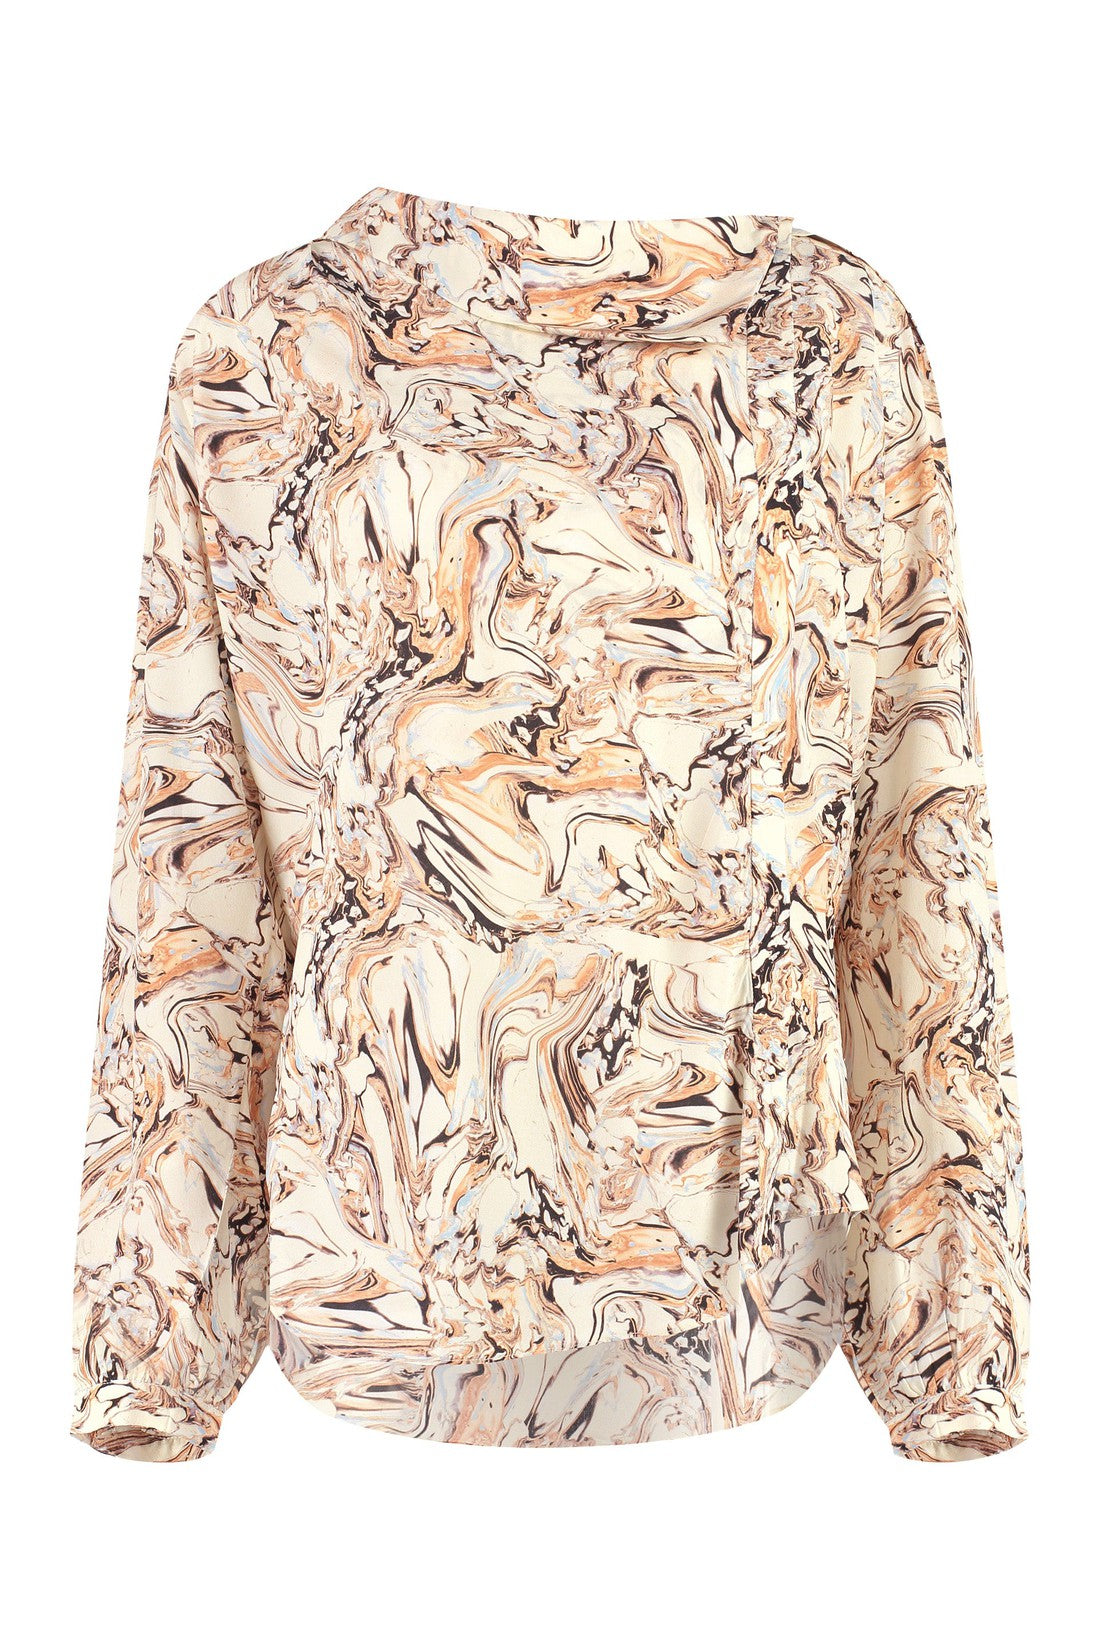 Isabel Marant-OUTLET-SALE-Tiphaine printed silk blouse-ARCHIVIST